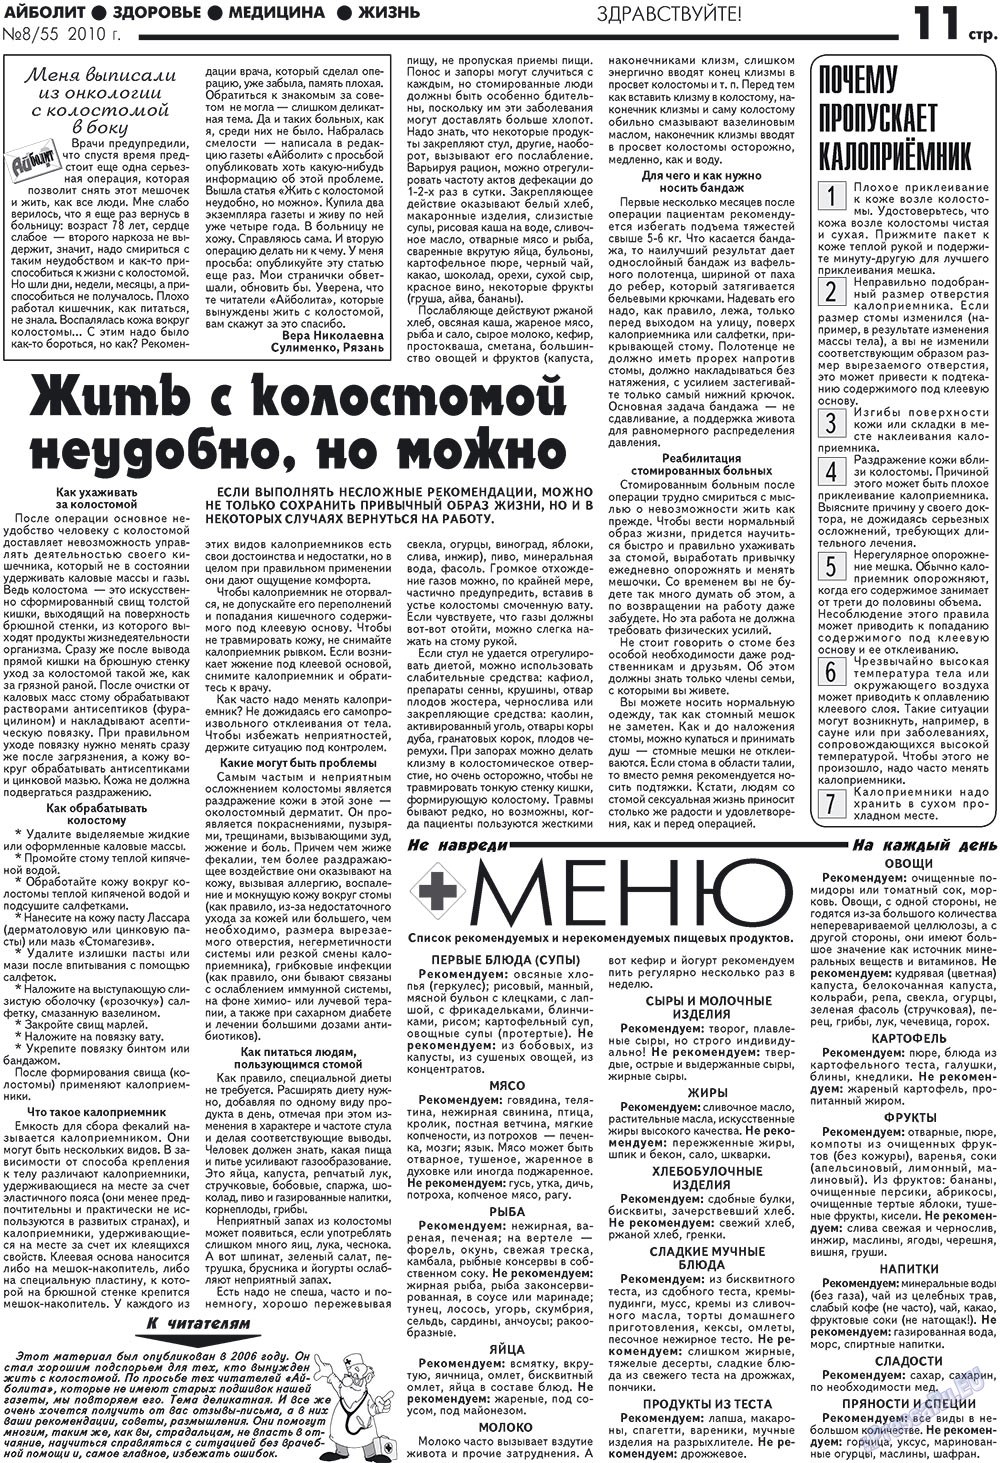 АйБолит (газета). 2010 год, номер 8, стр. 11